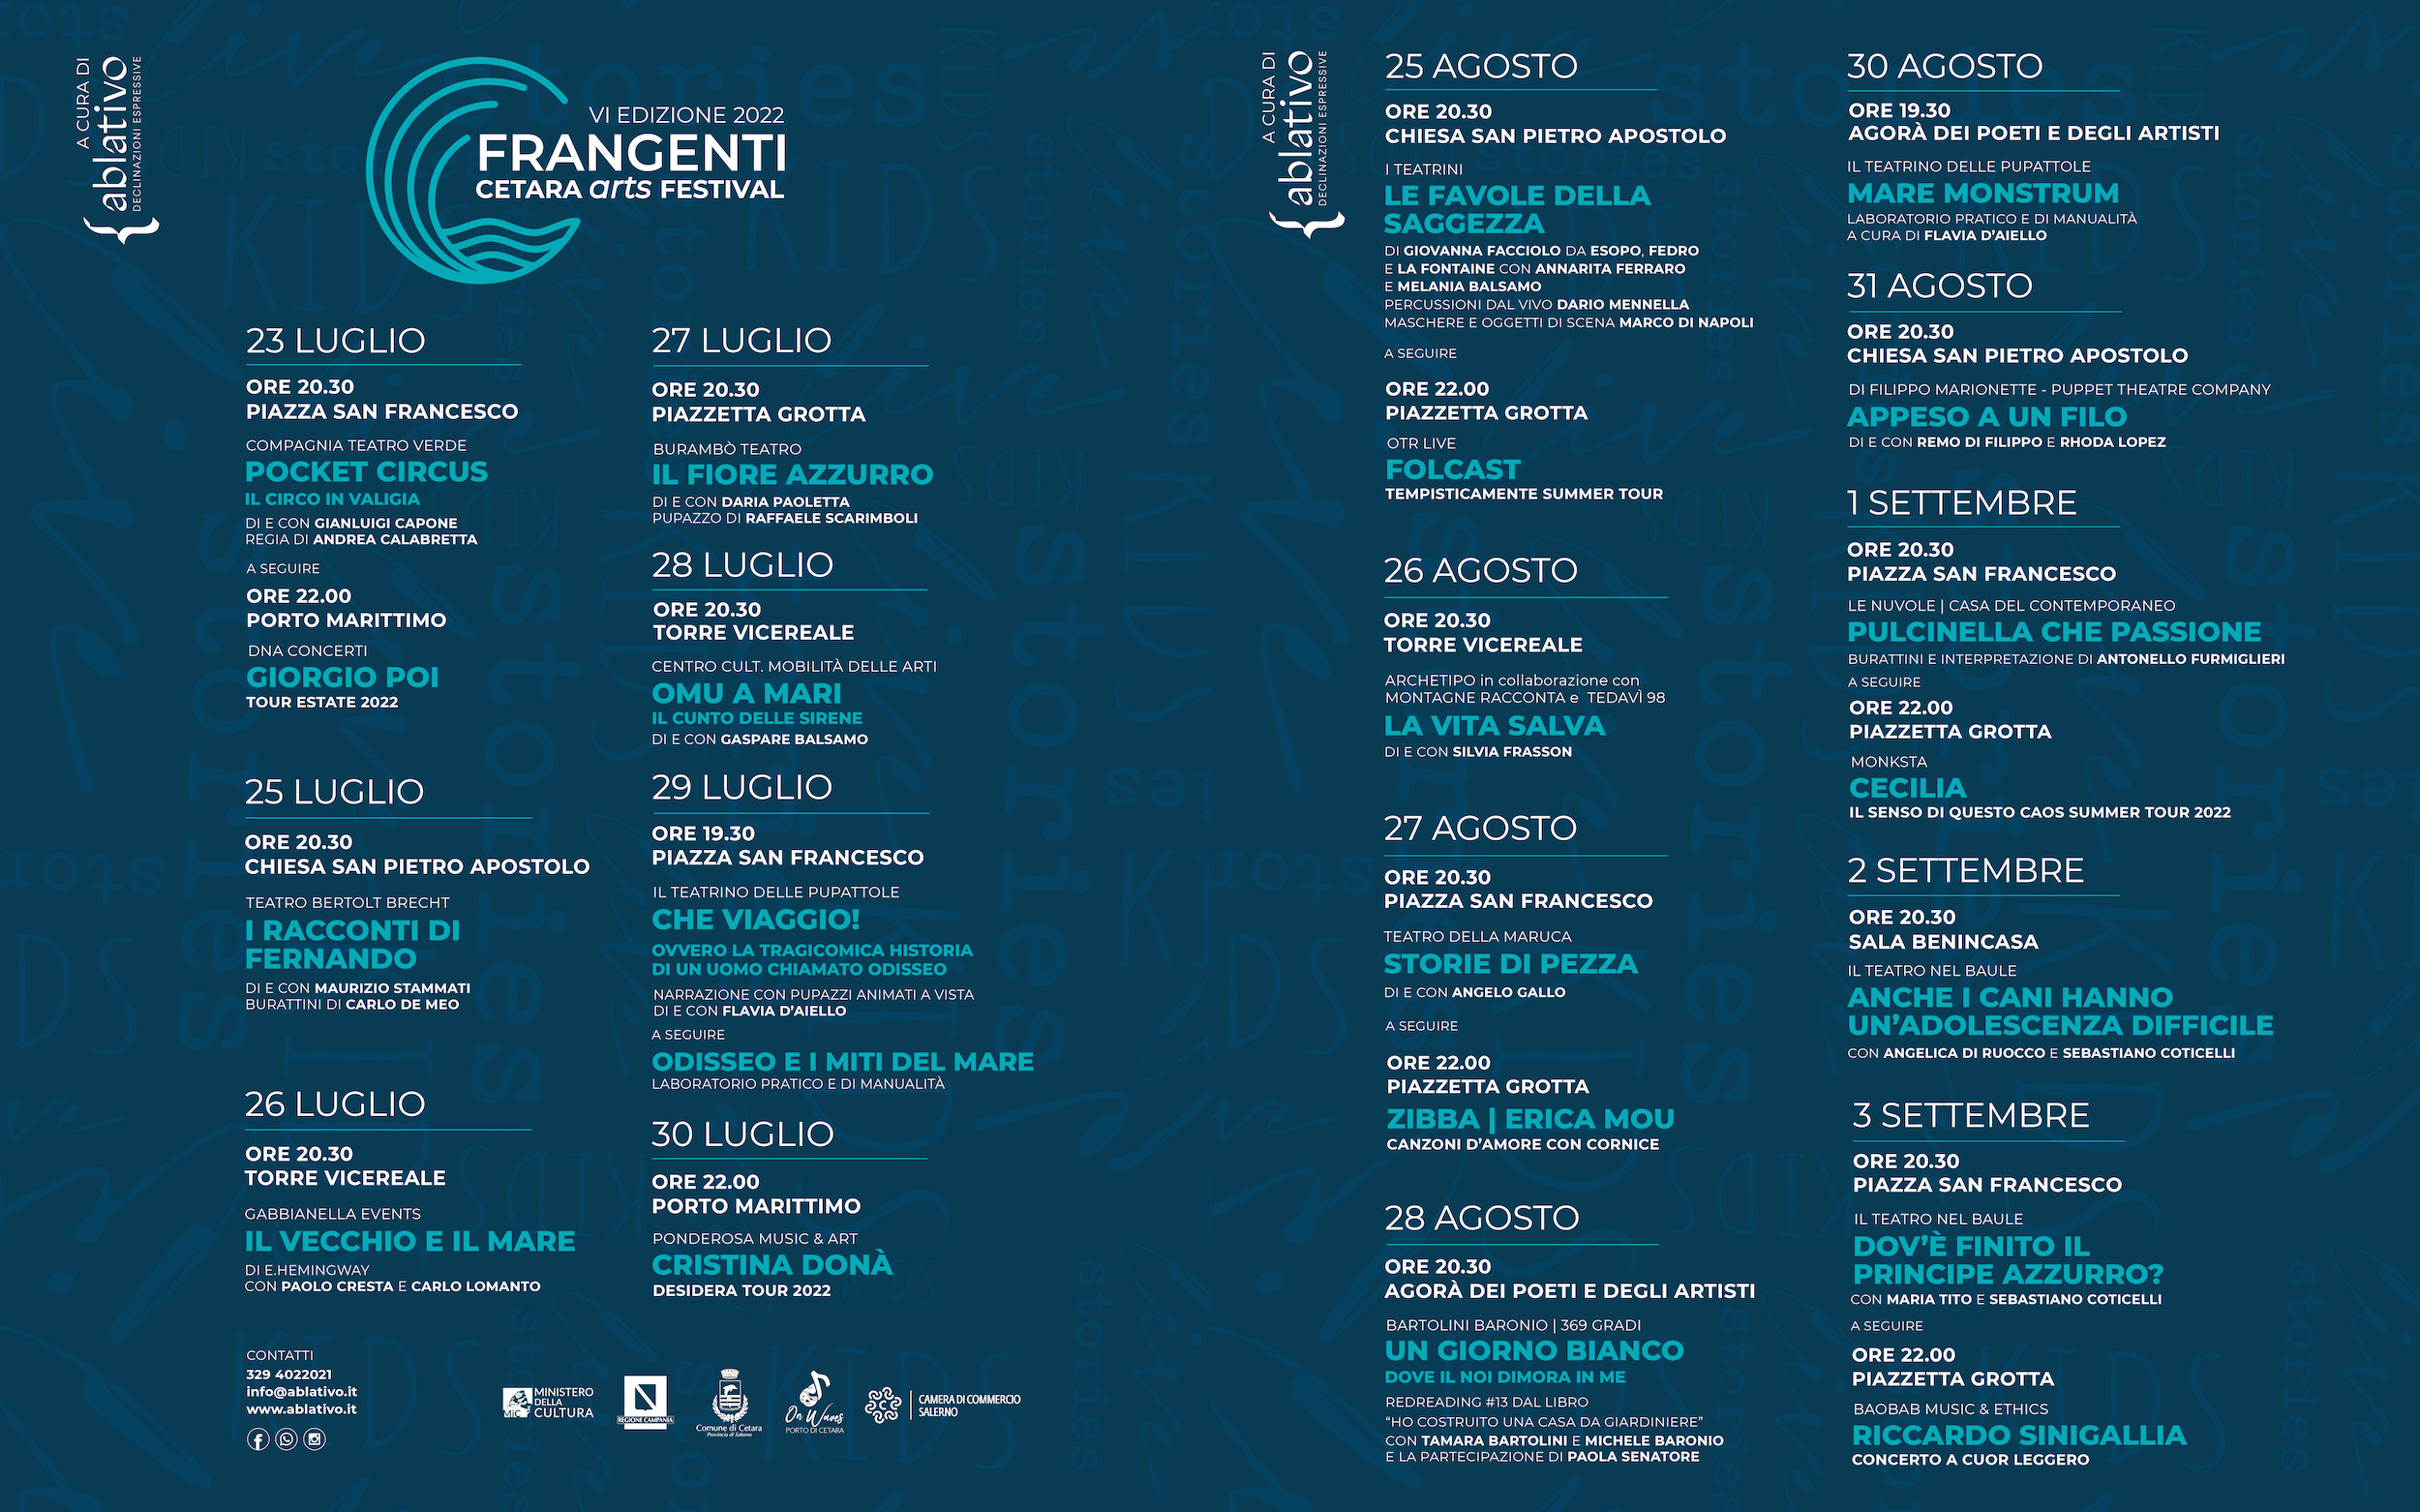 Frangenti - Cetara Arts Festival